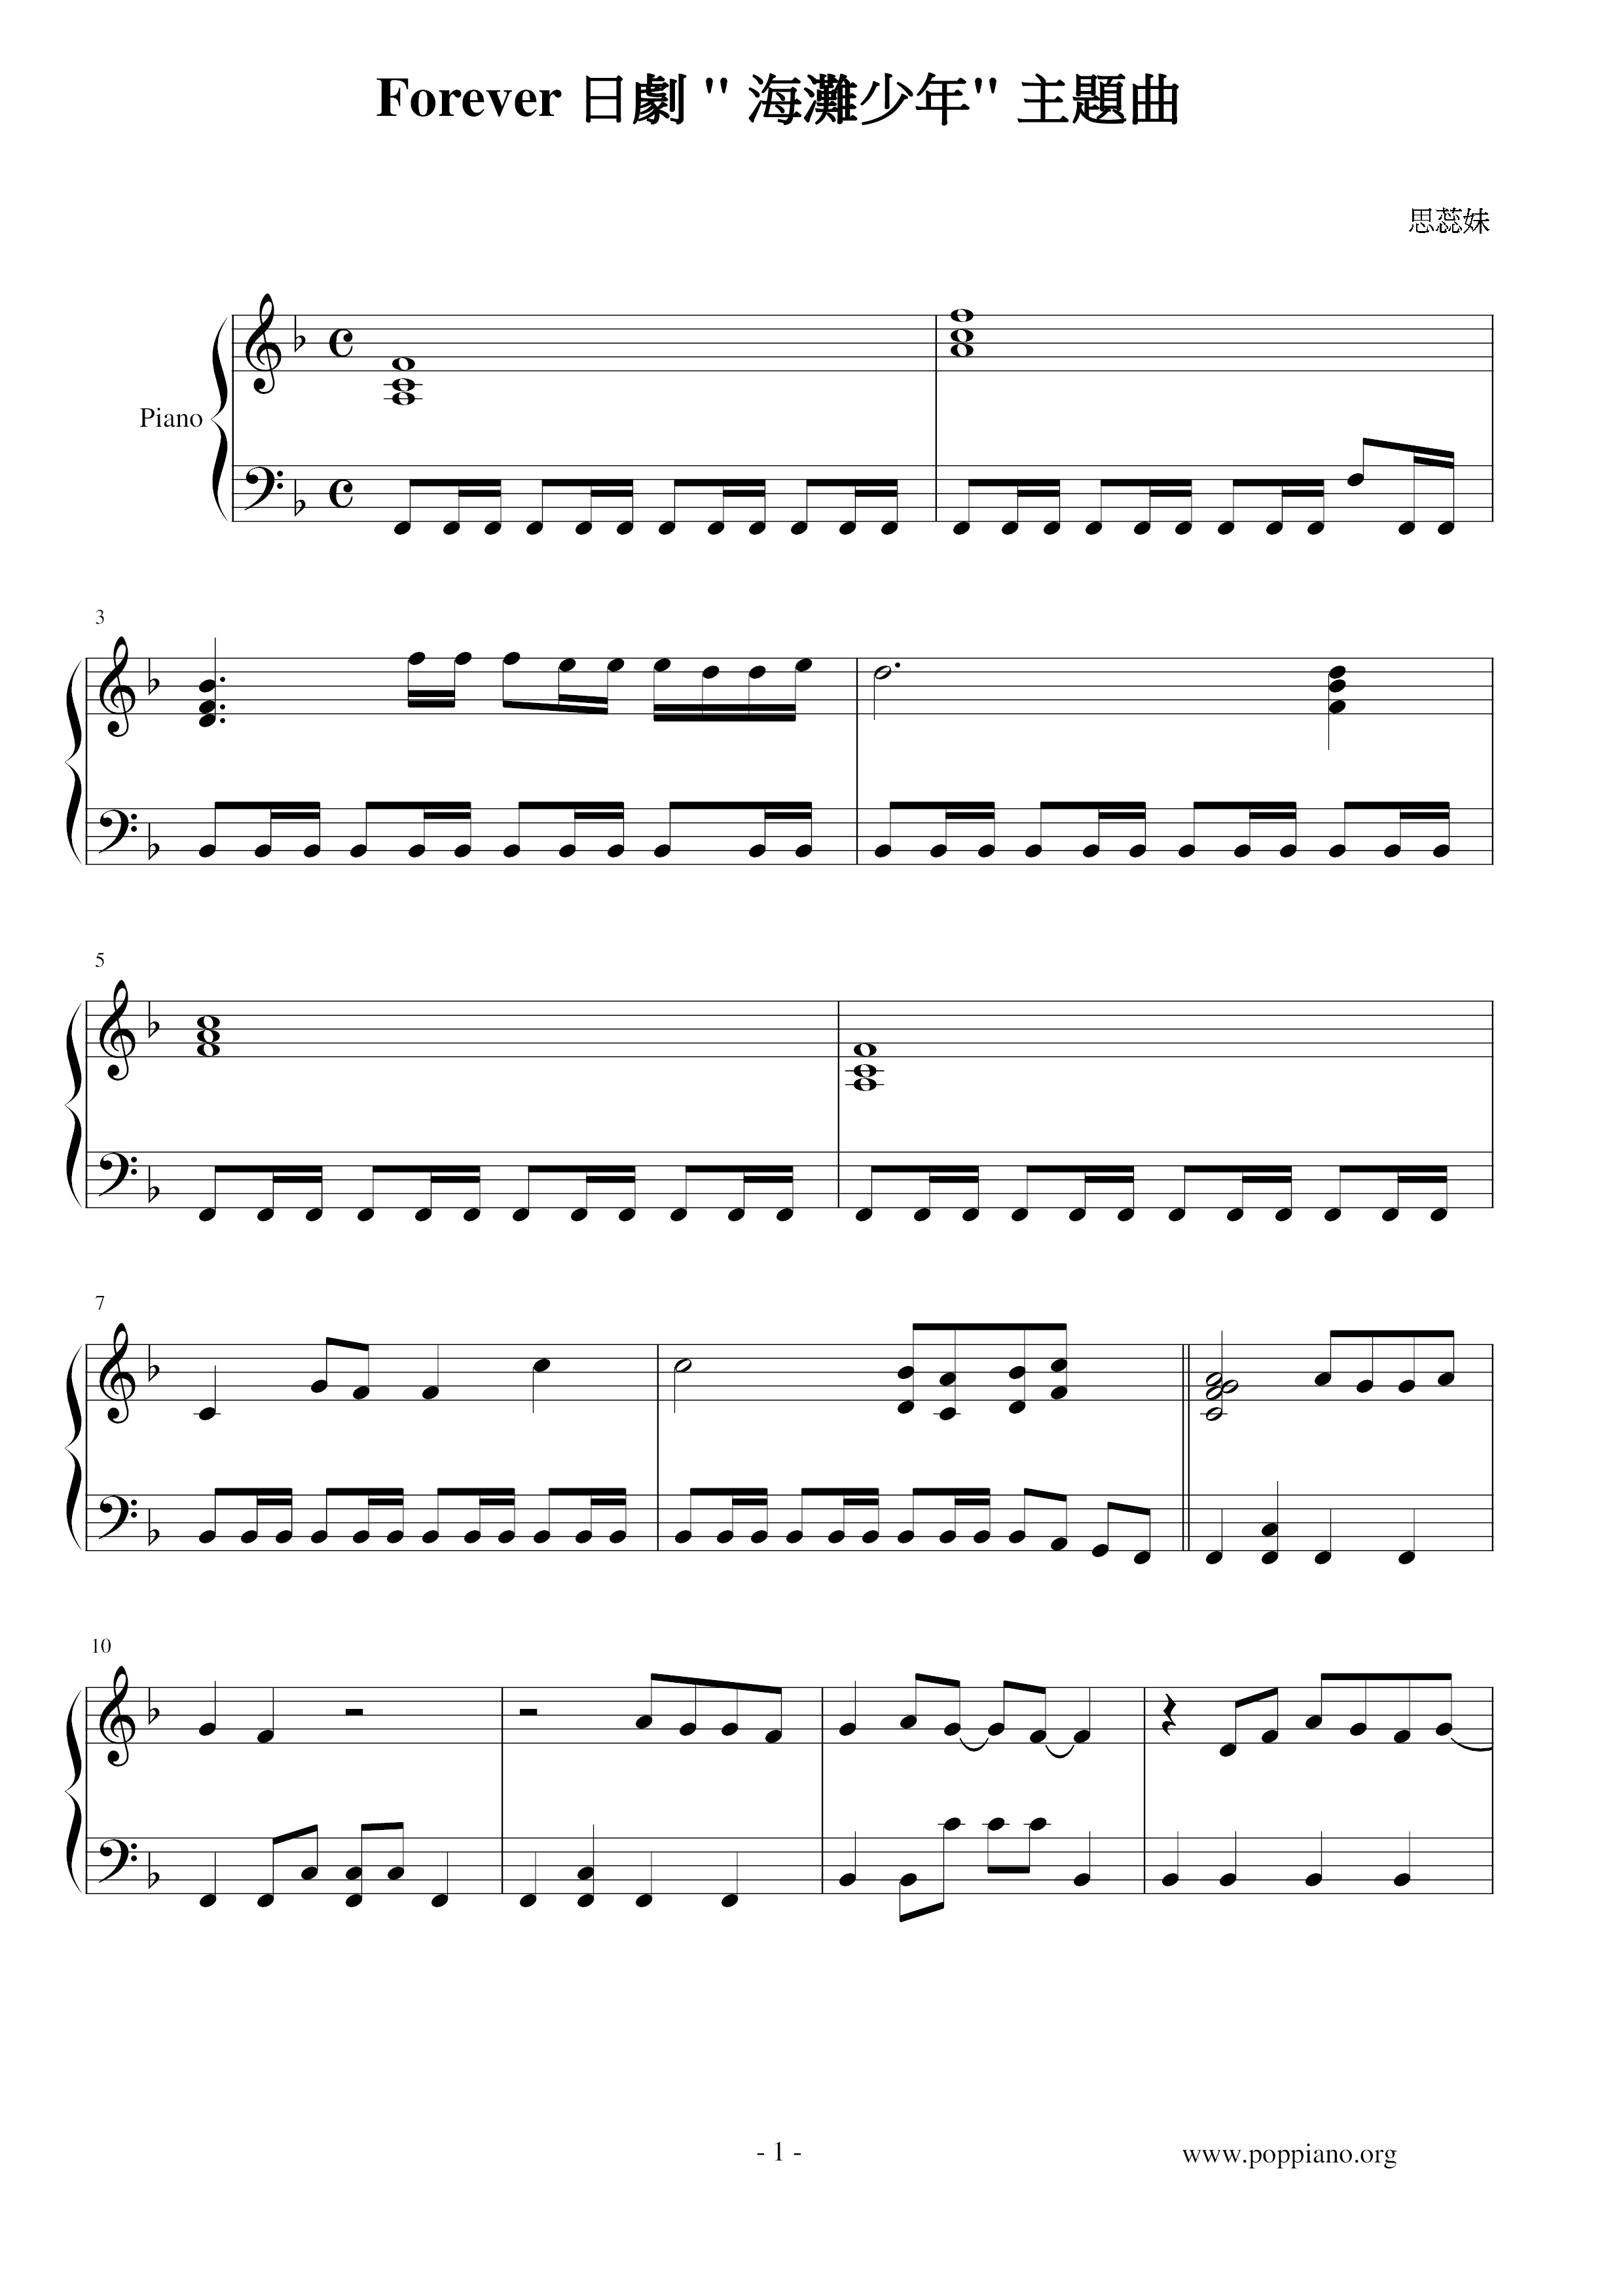 Forever-Beach Boy (Theme) Score